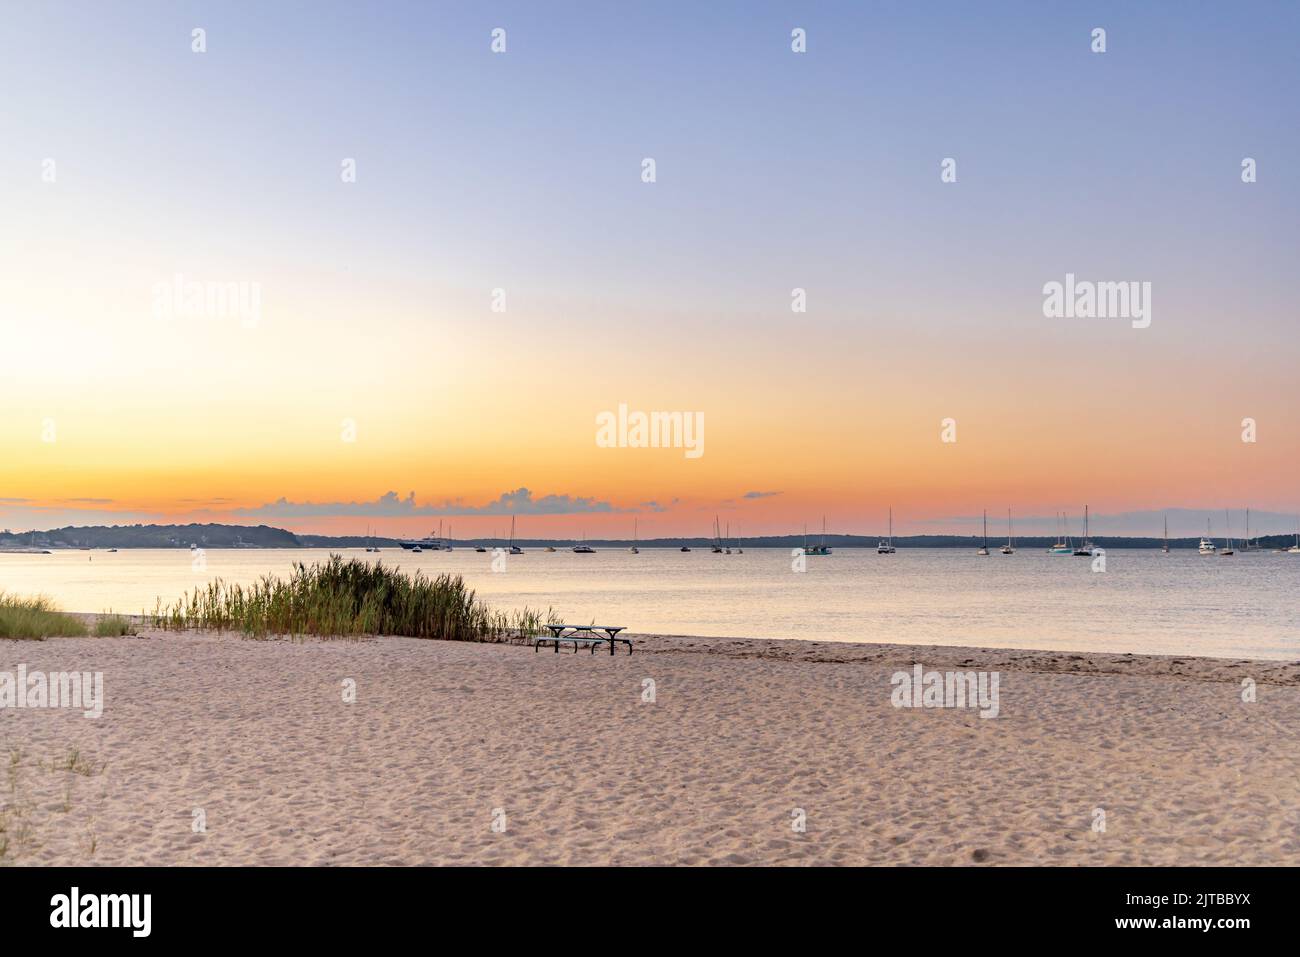 Sunset at Haven's Beach, Sag Harbor, NY  11963 Stock Photo